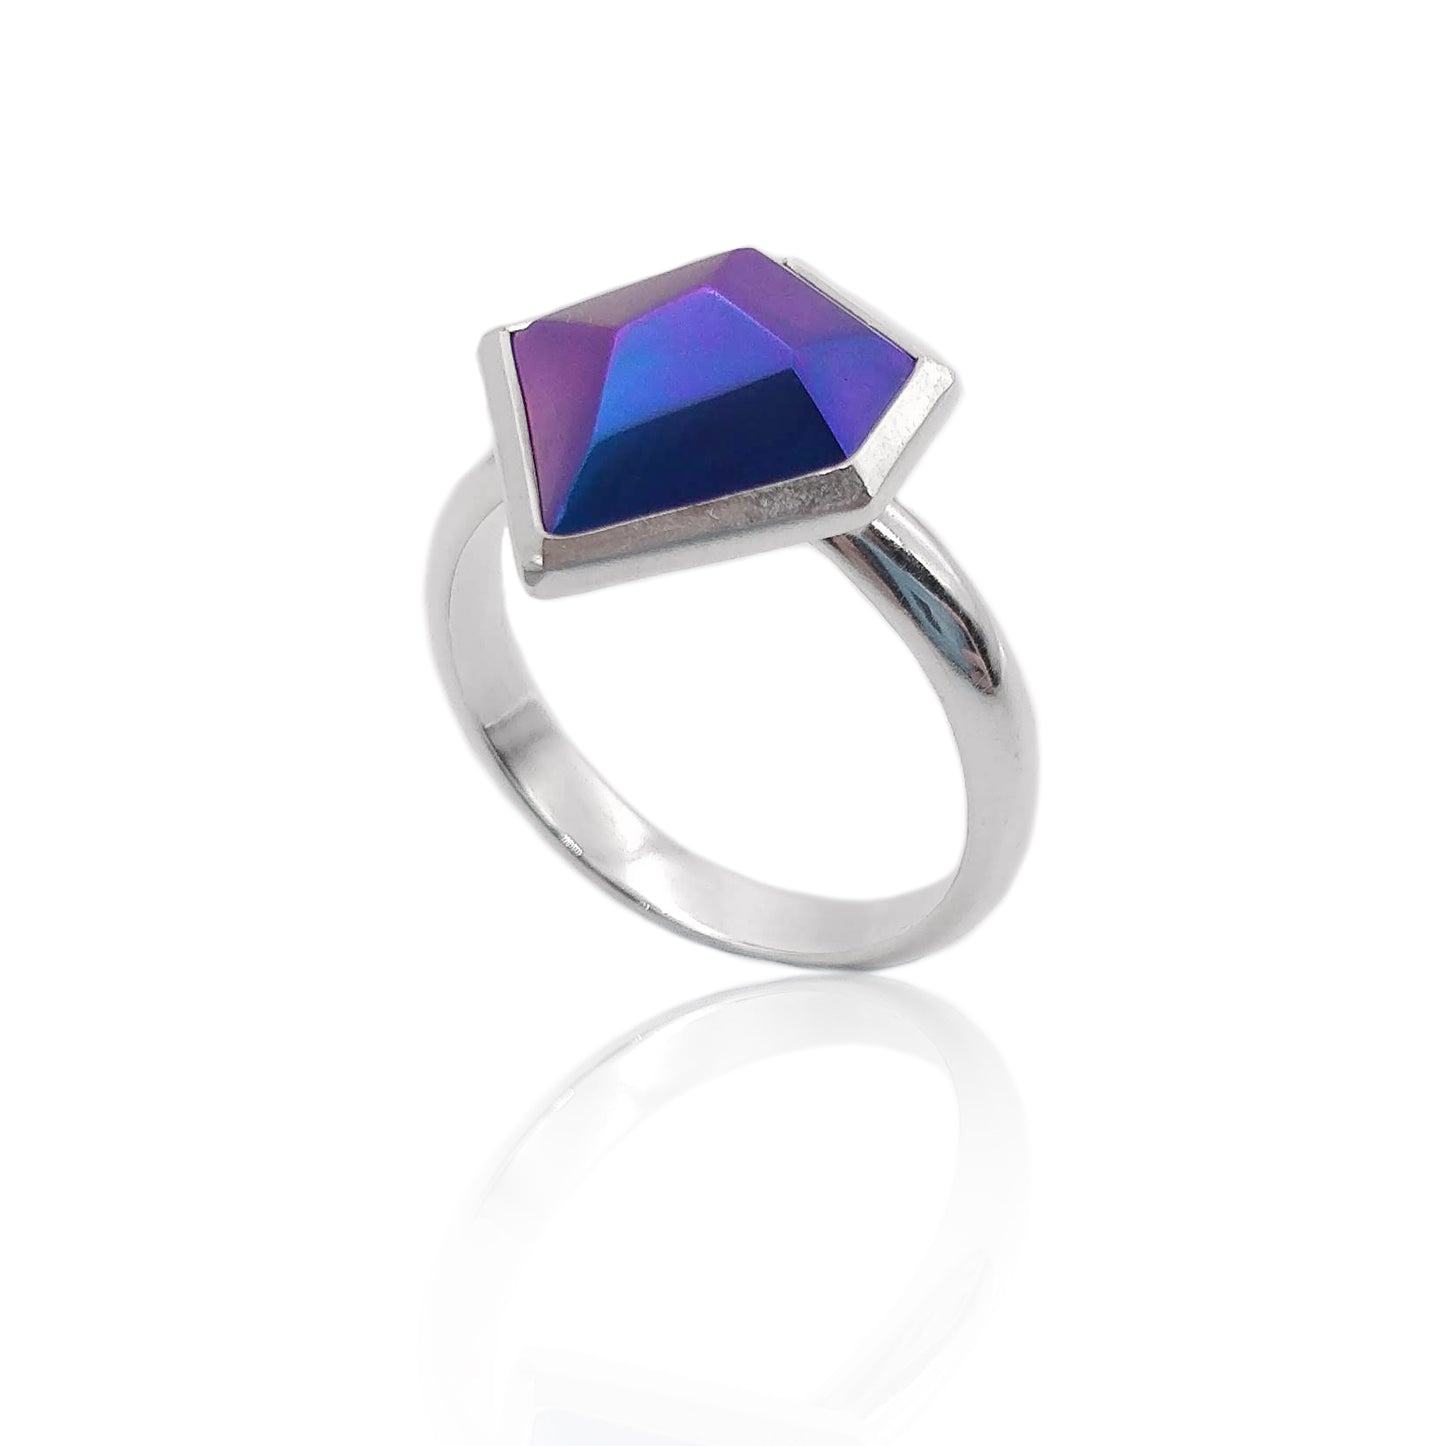 Iridescent Niobium "Crystal" Ring